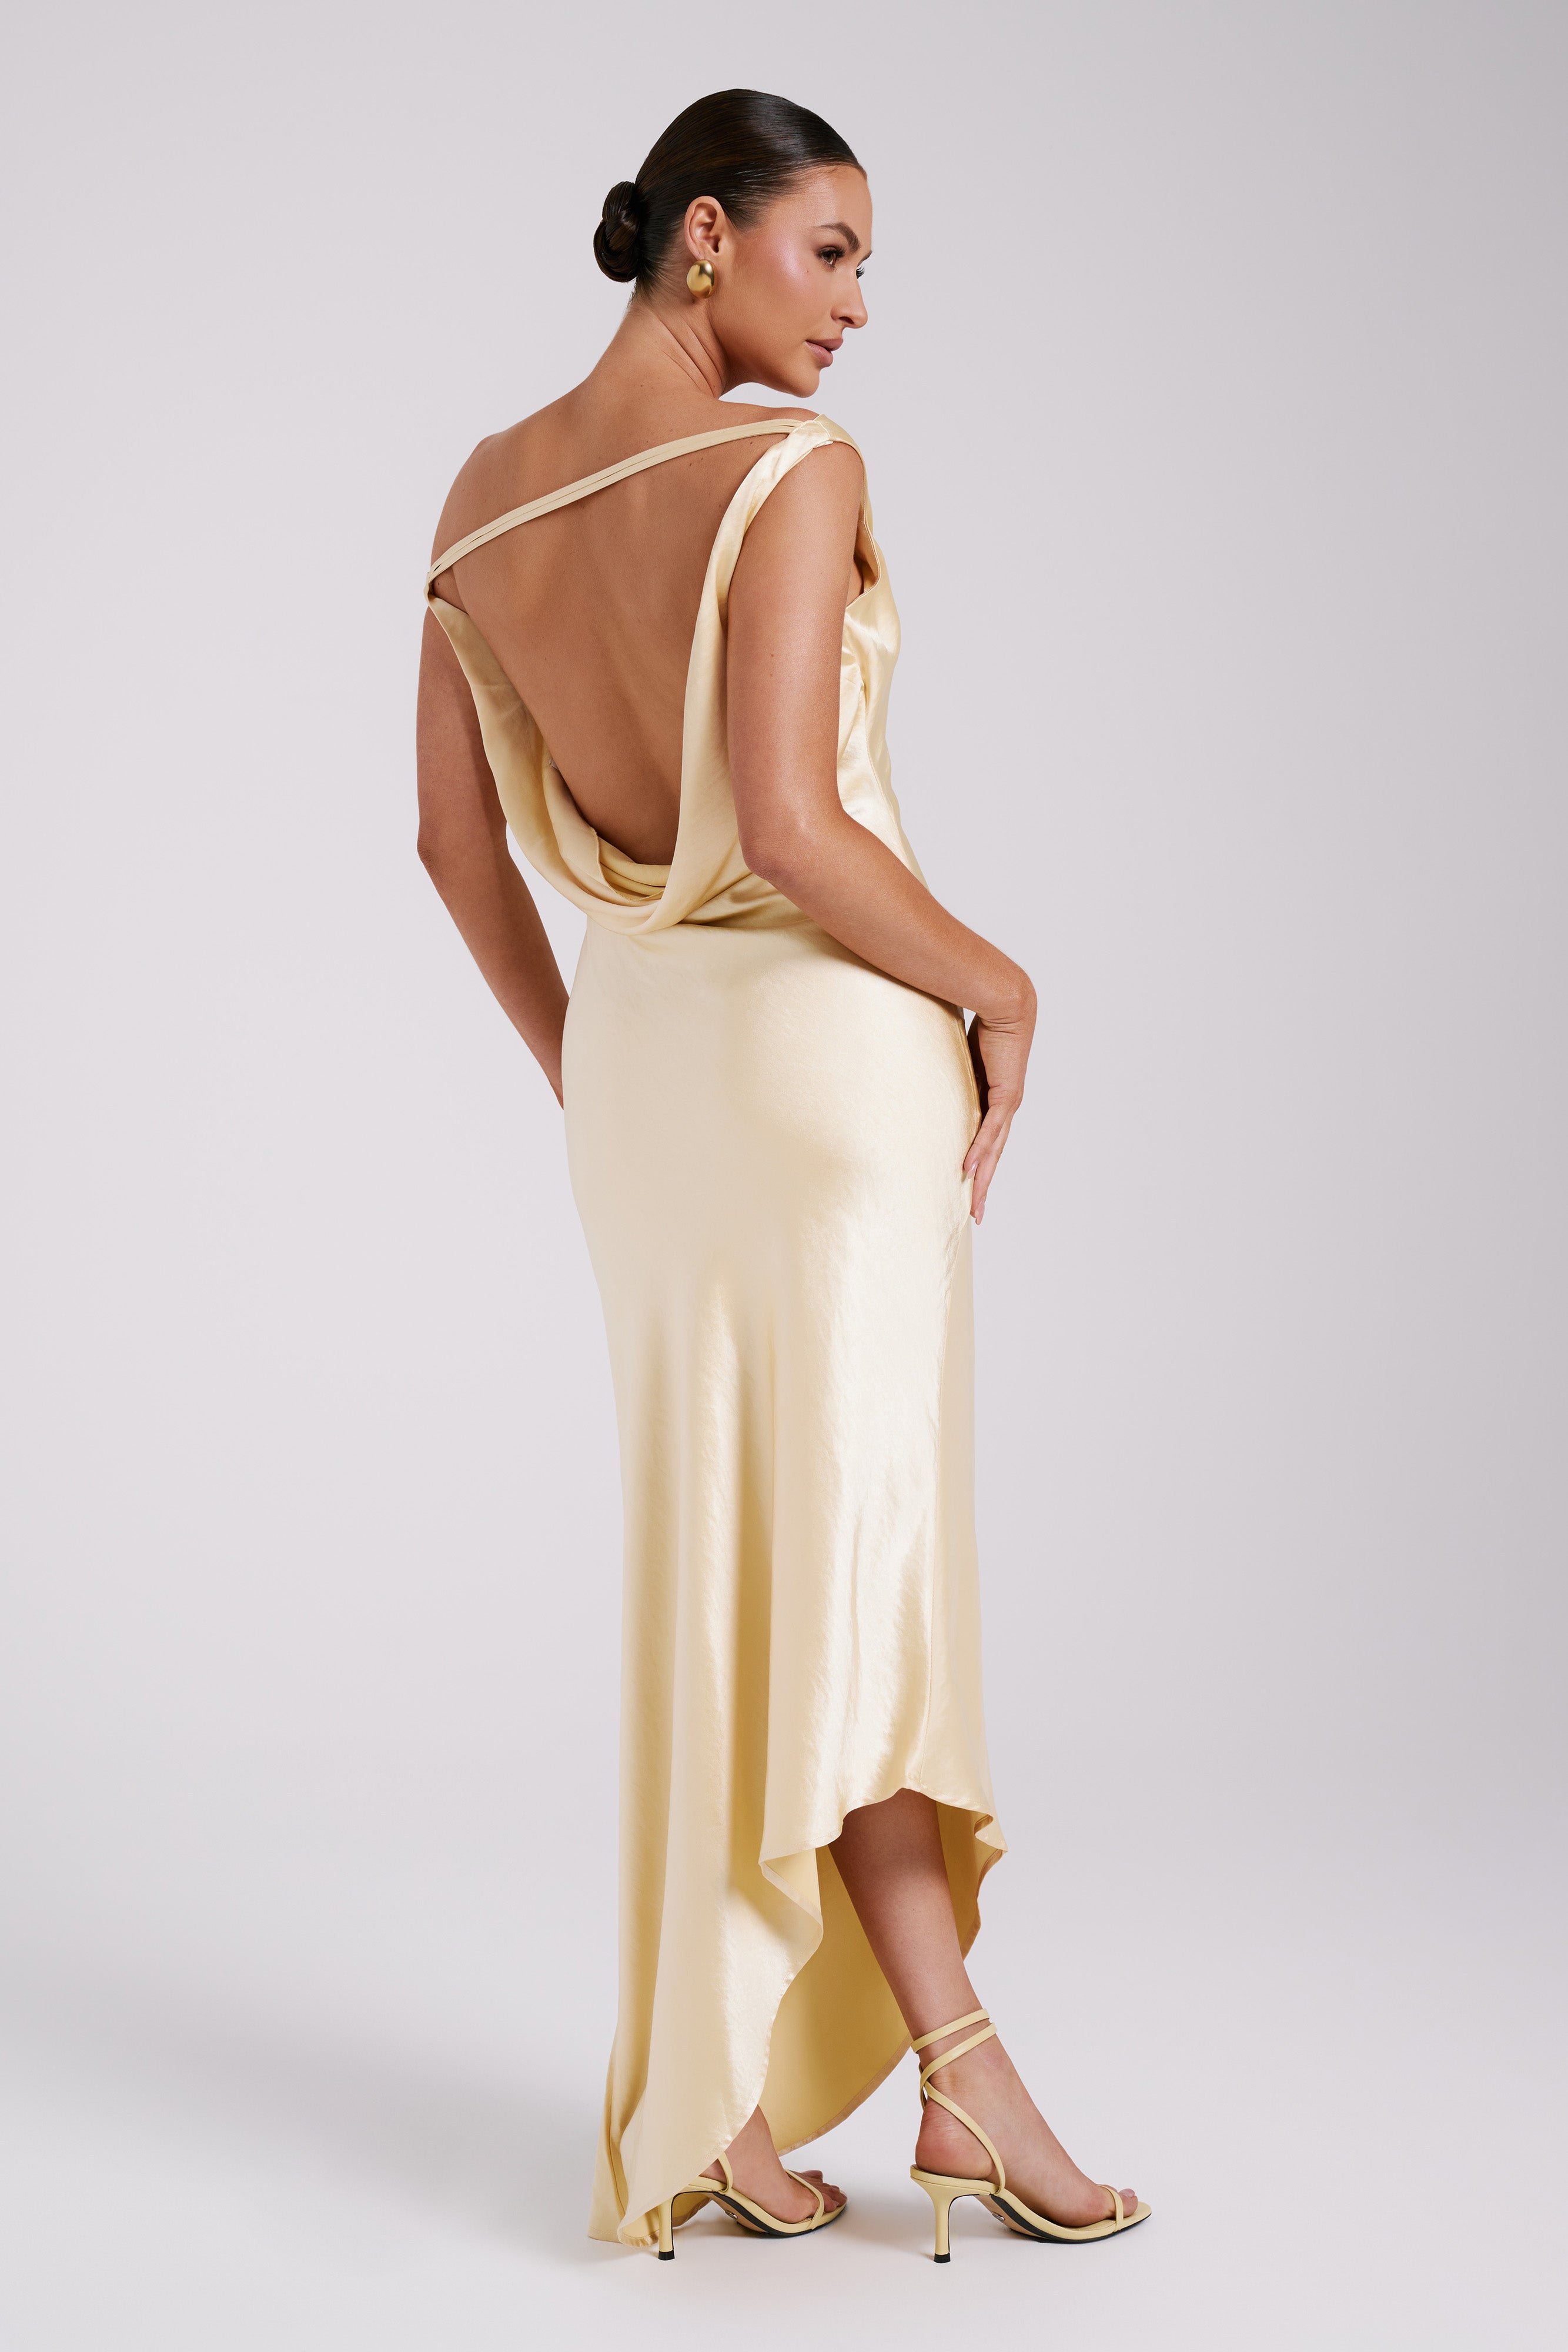 Yvette Slip Maxi Dress With Asymmetrical Hem - Black - MESHKI U.S